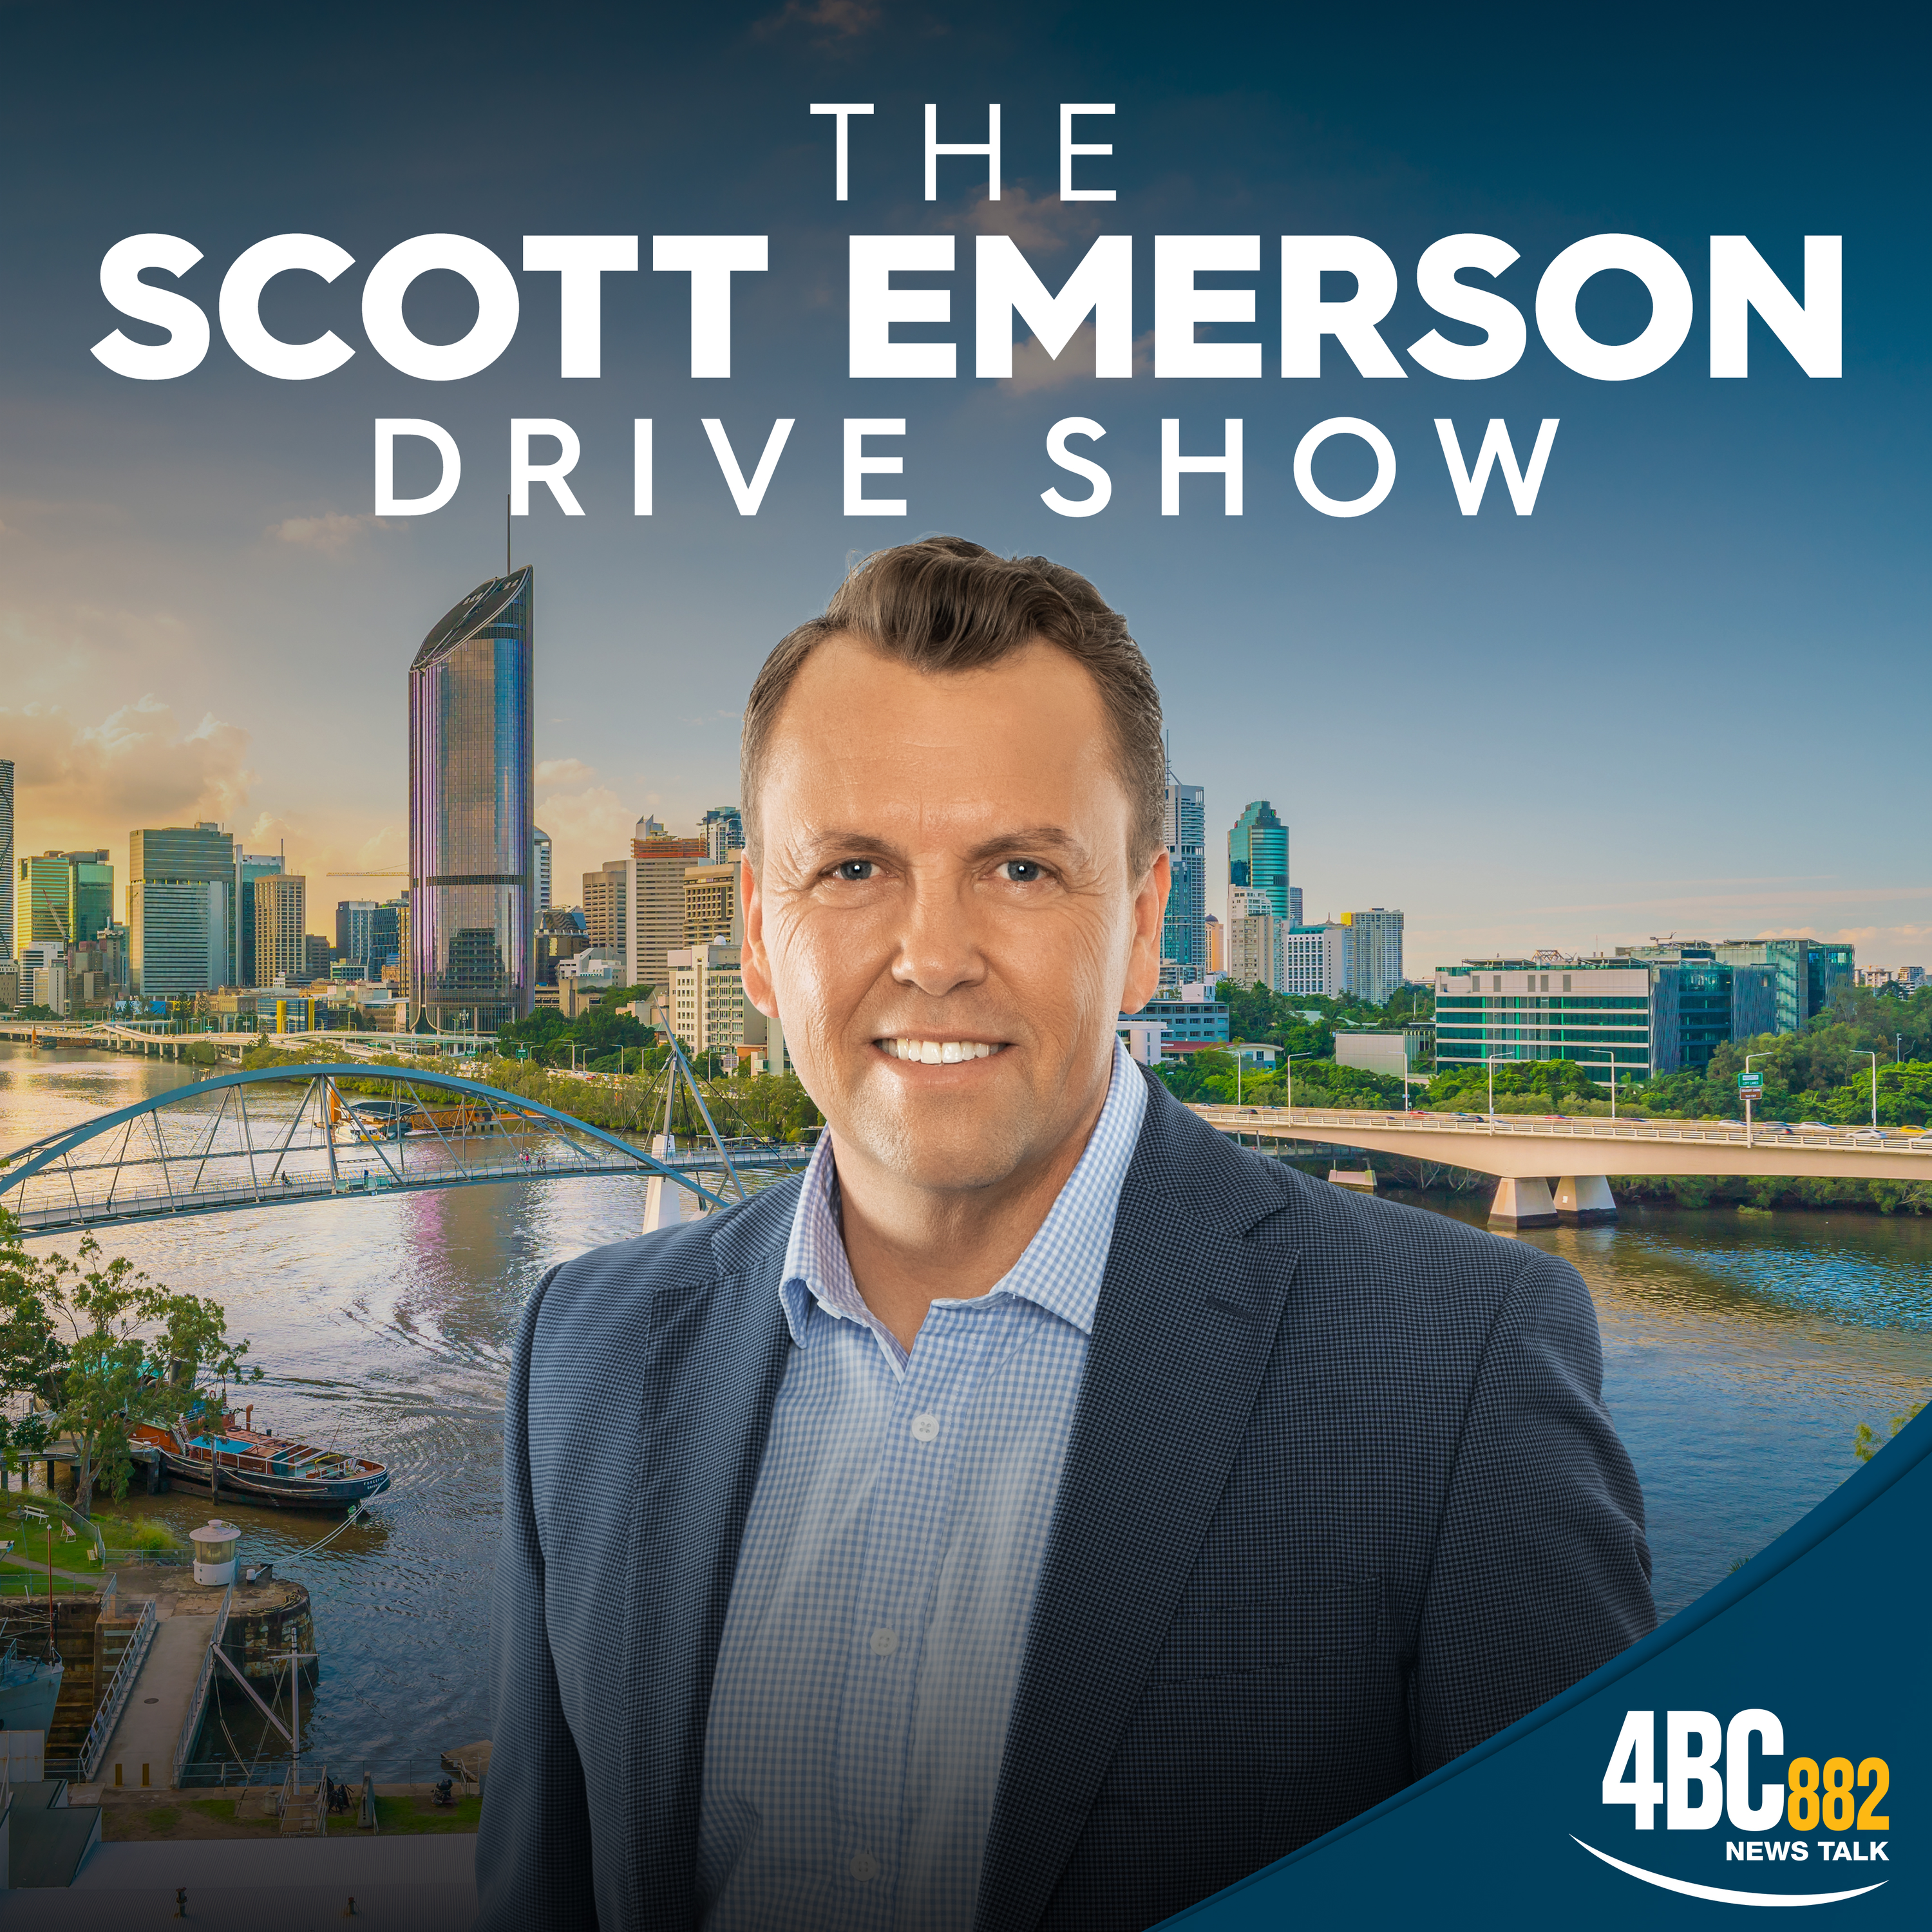 The Full Scott Emerson Drive Show October 8